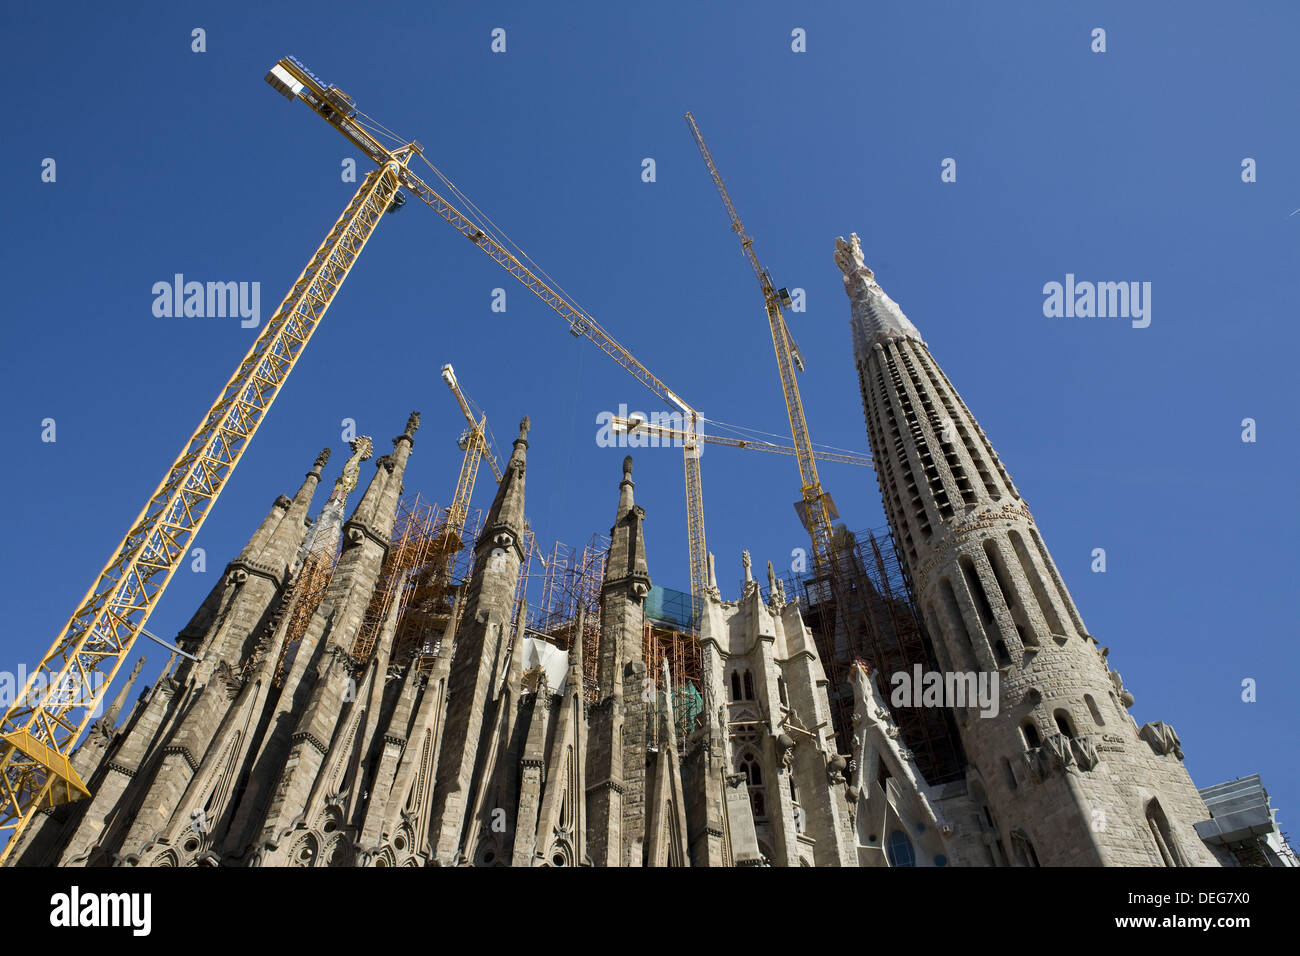 Wide view of the Sagrada Familia with cranes. Barcelona, Catalonia, Spain. Stock Photo